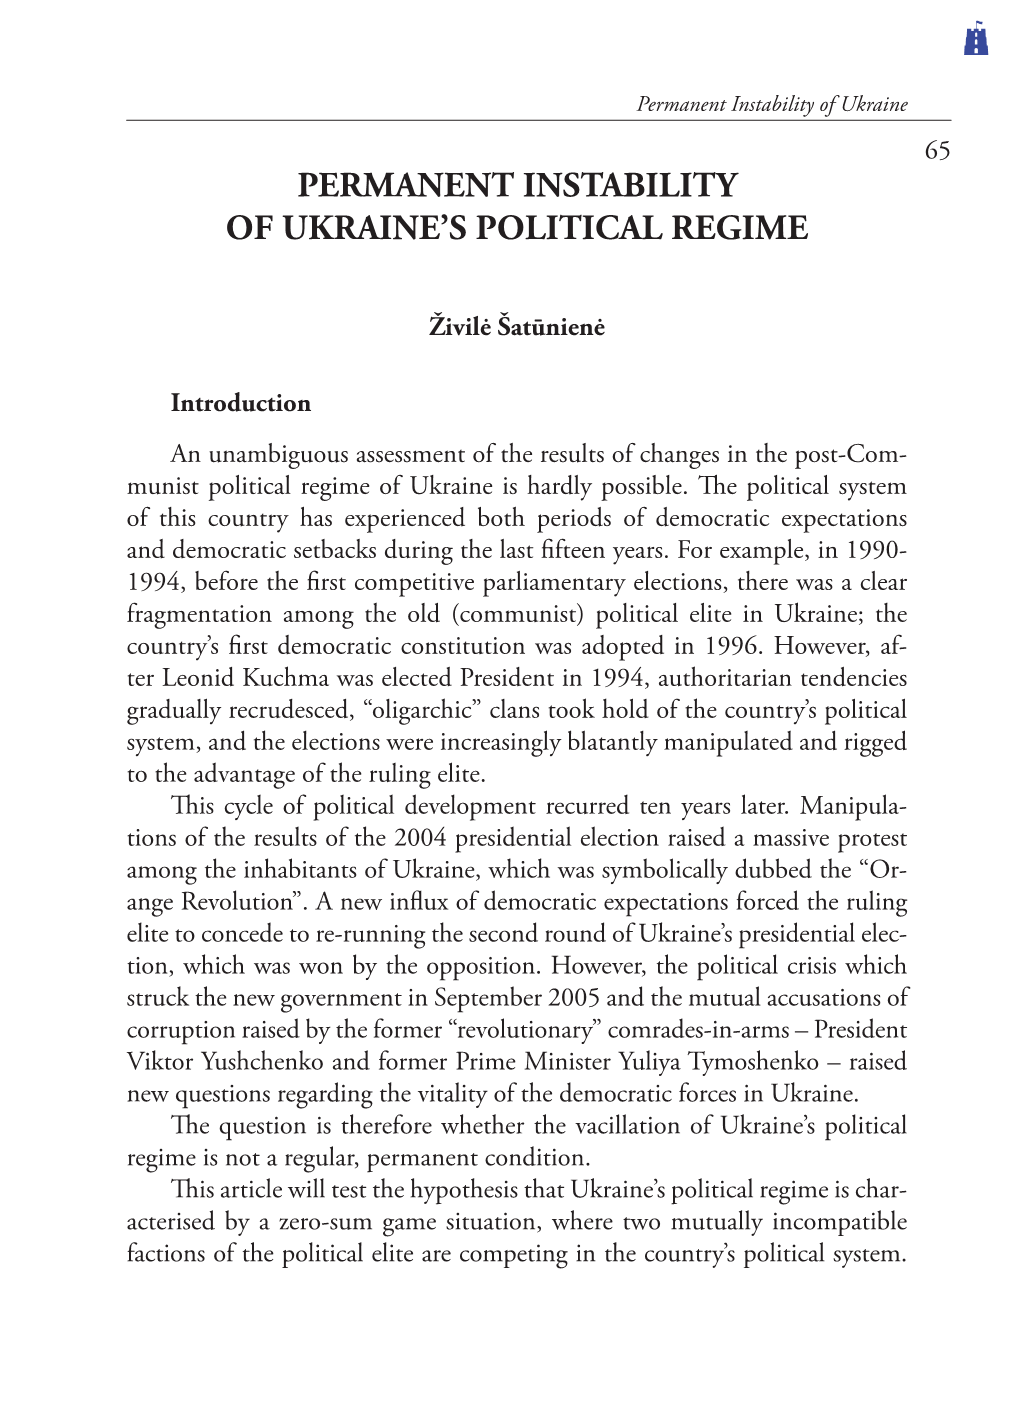 Permanent Instability of Ukraine's Political Regime